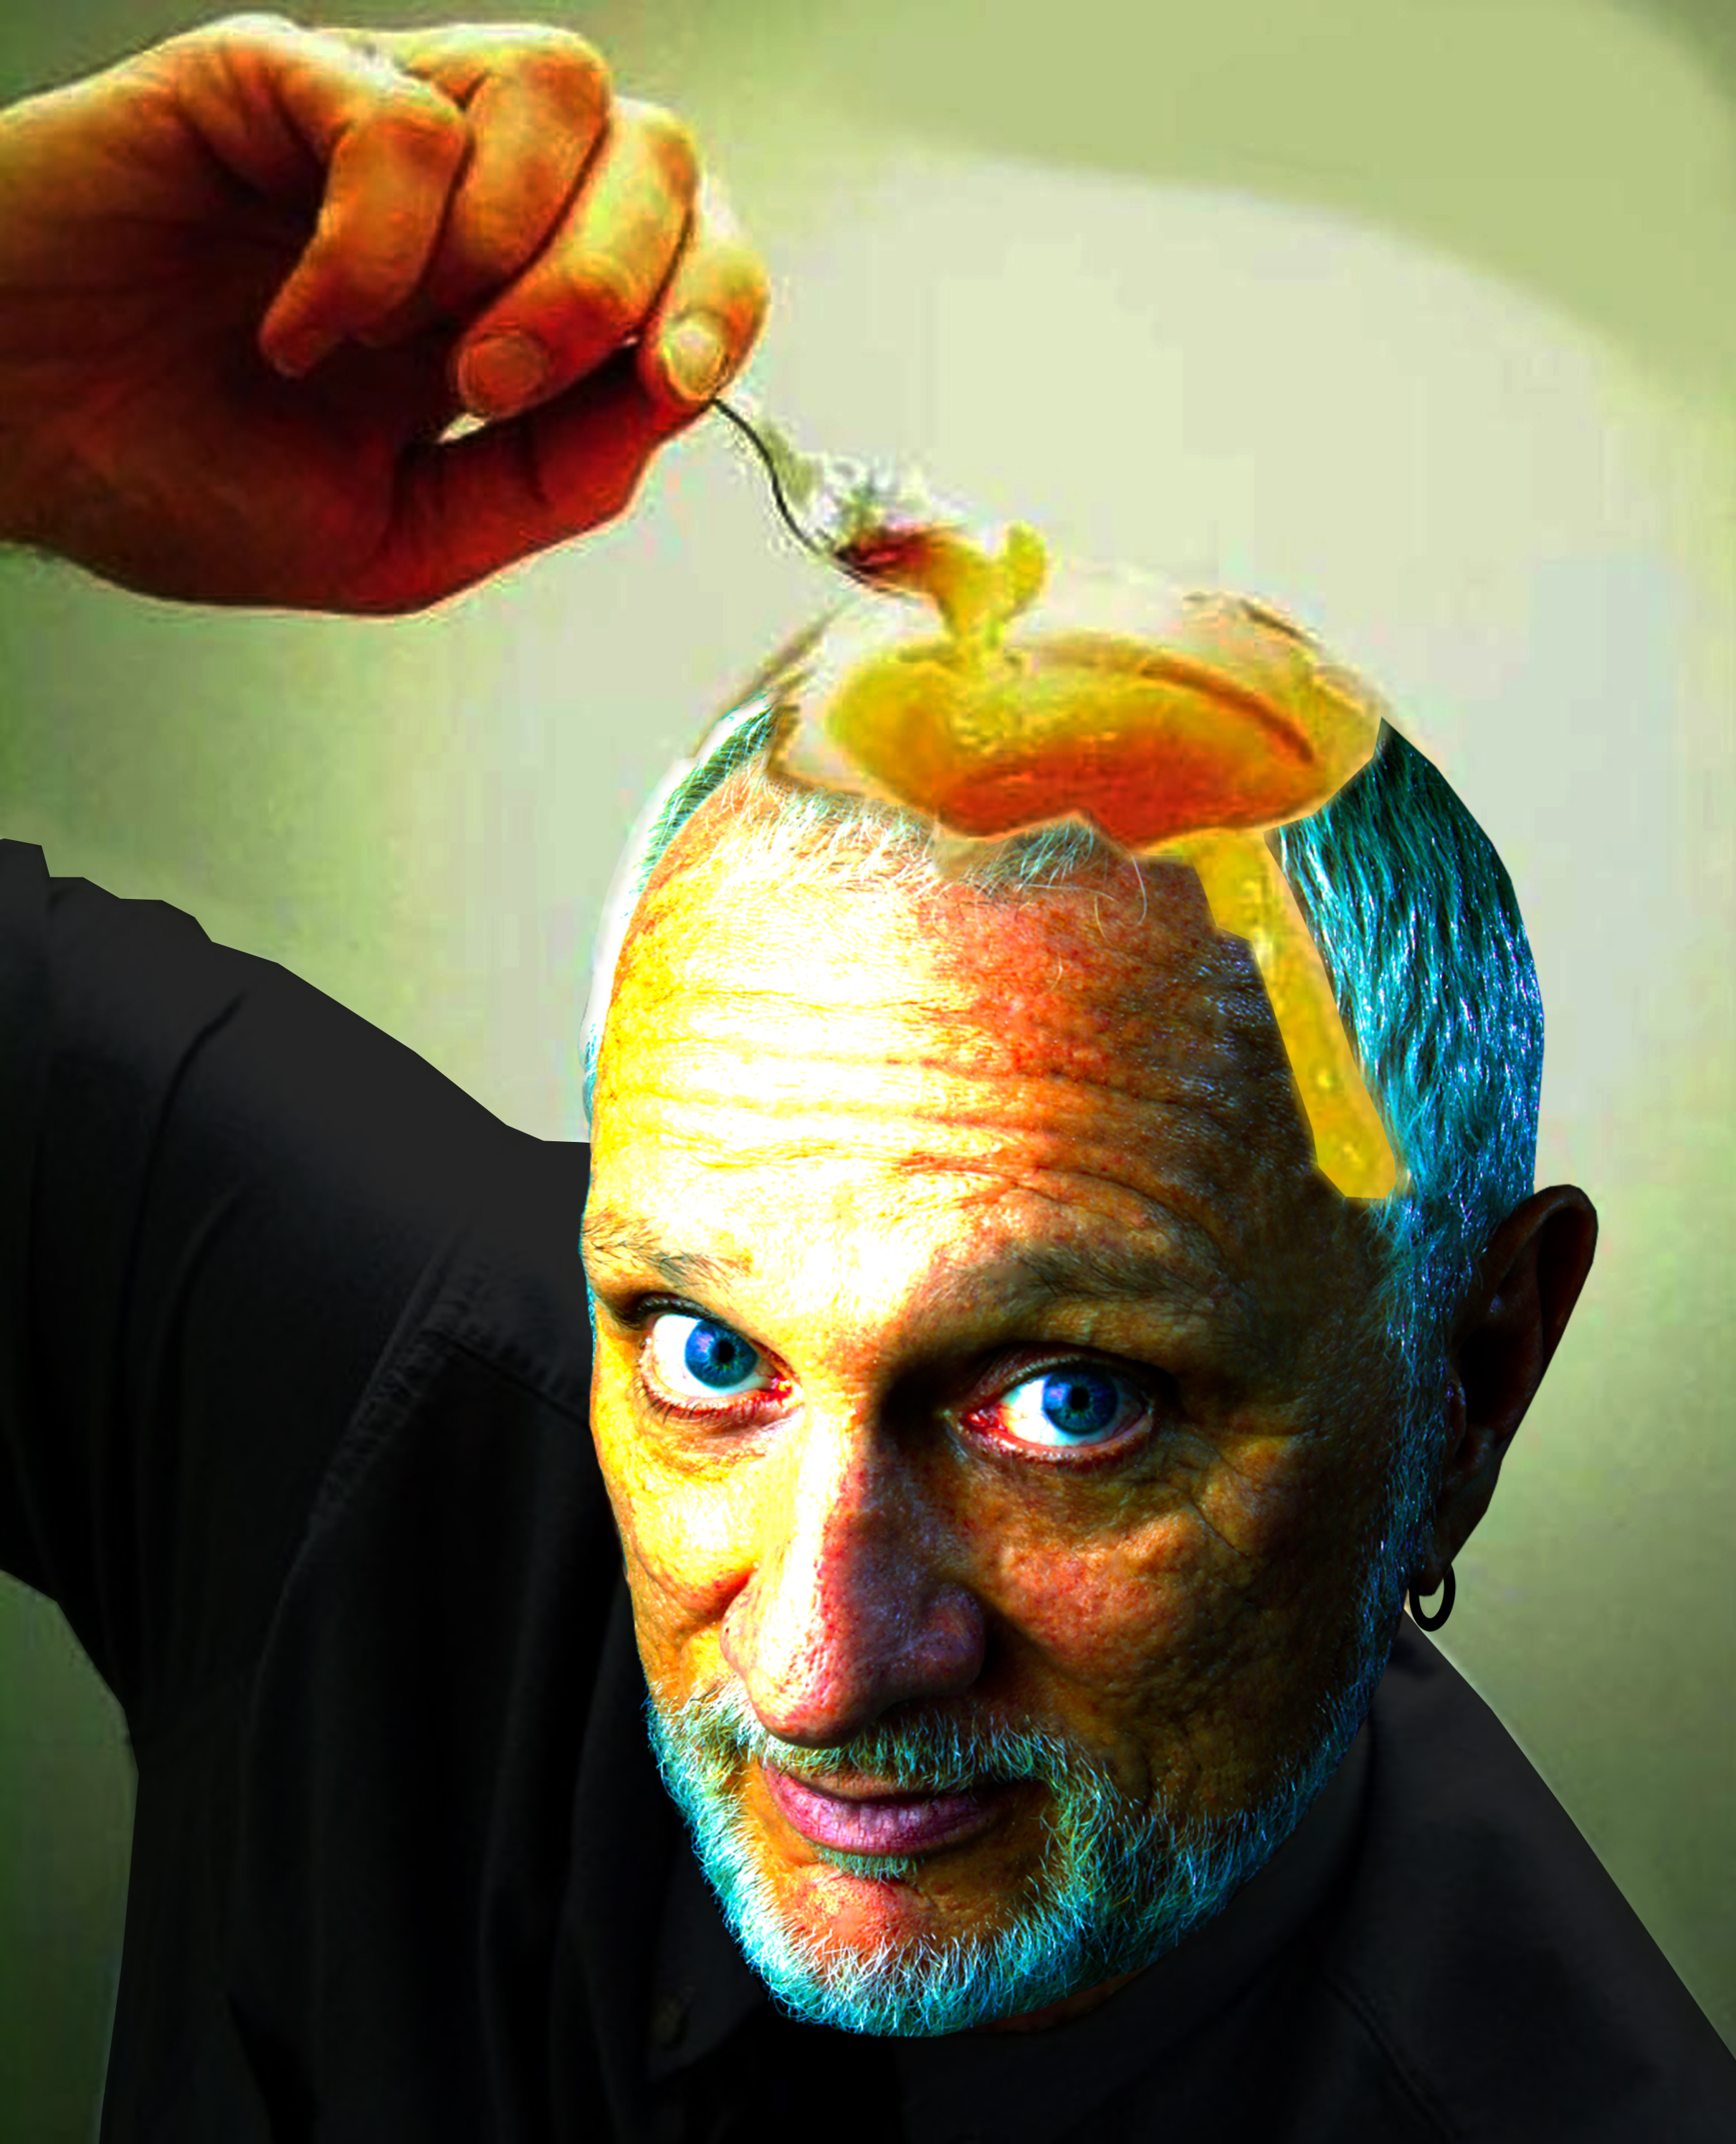 Giuliano As The Egg Head